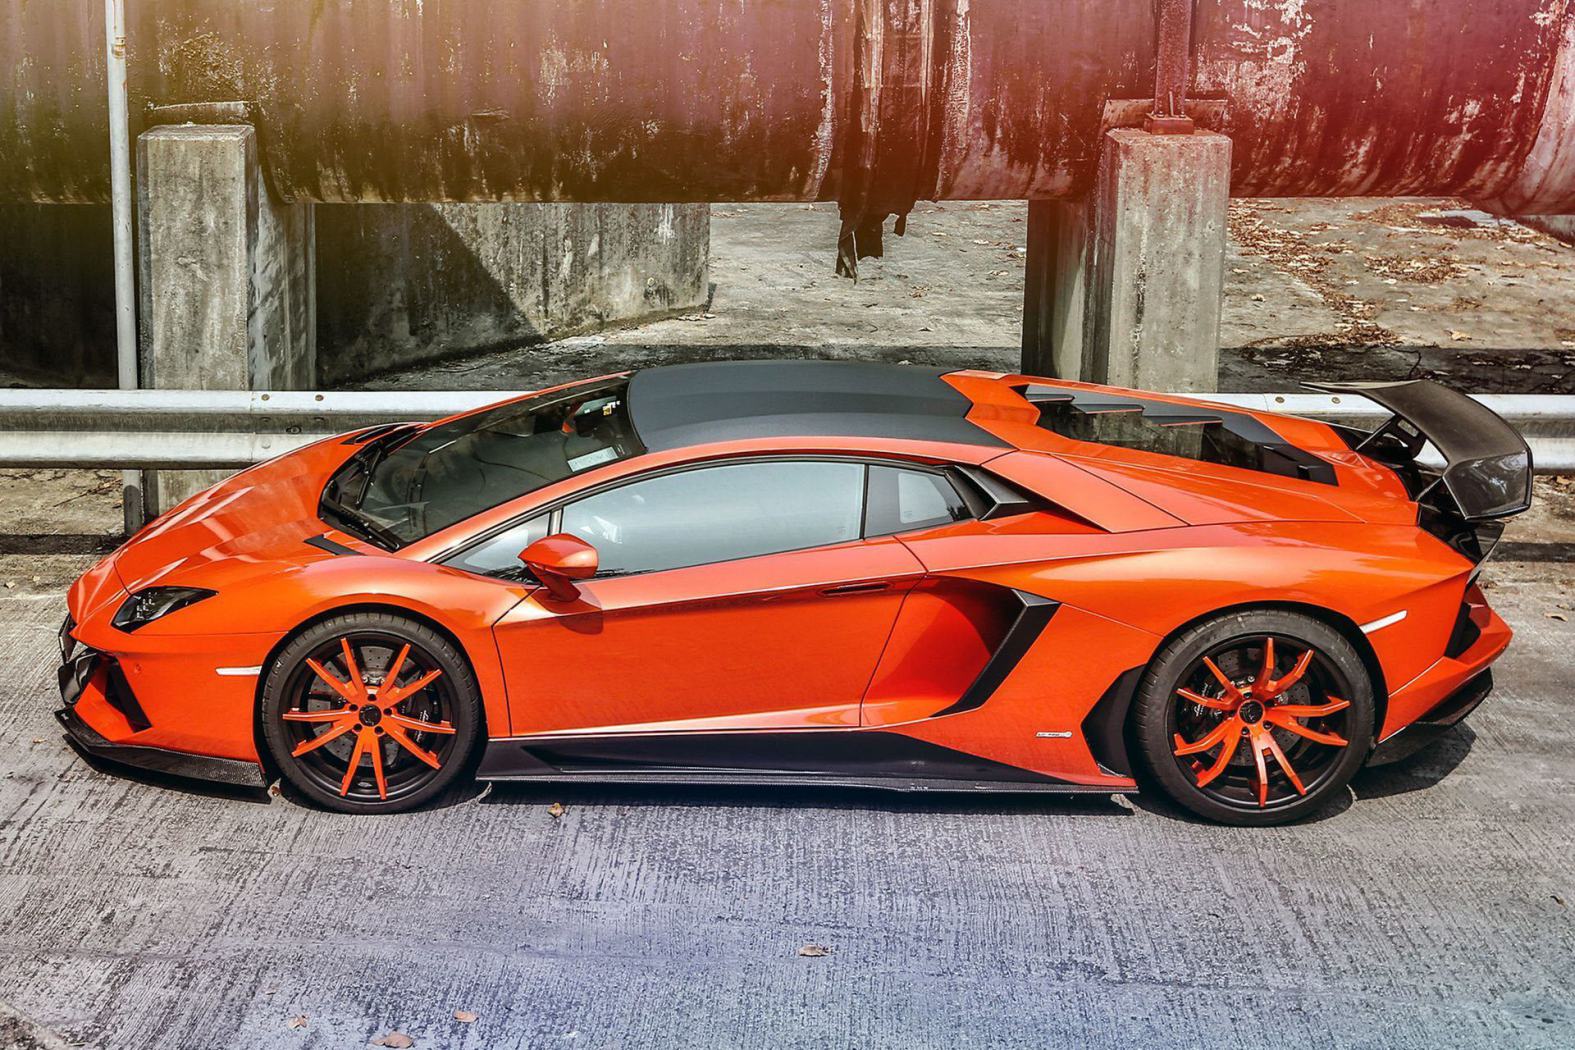 Lamborghini-Aventador-DMC-body-kit-tuning-empire (2)